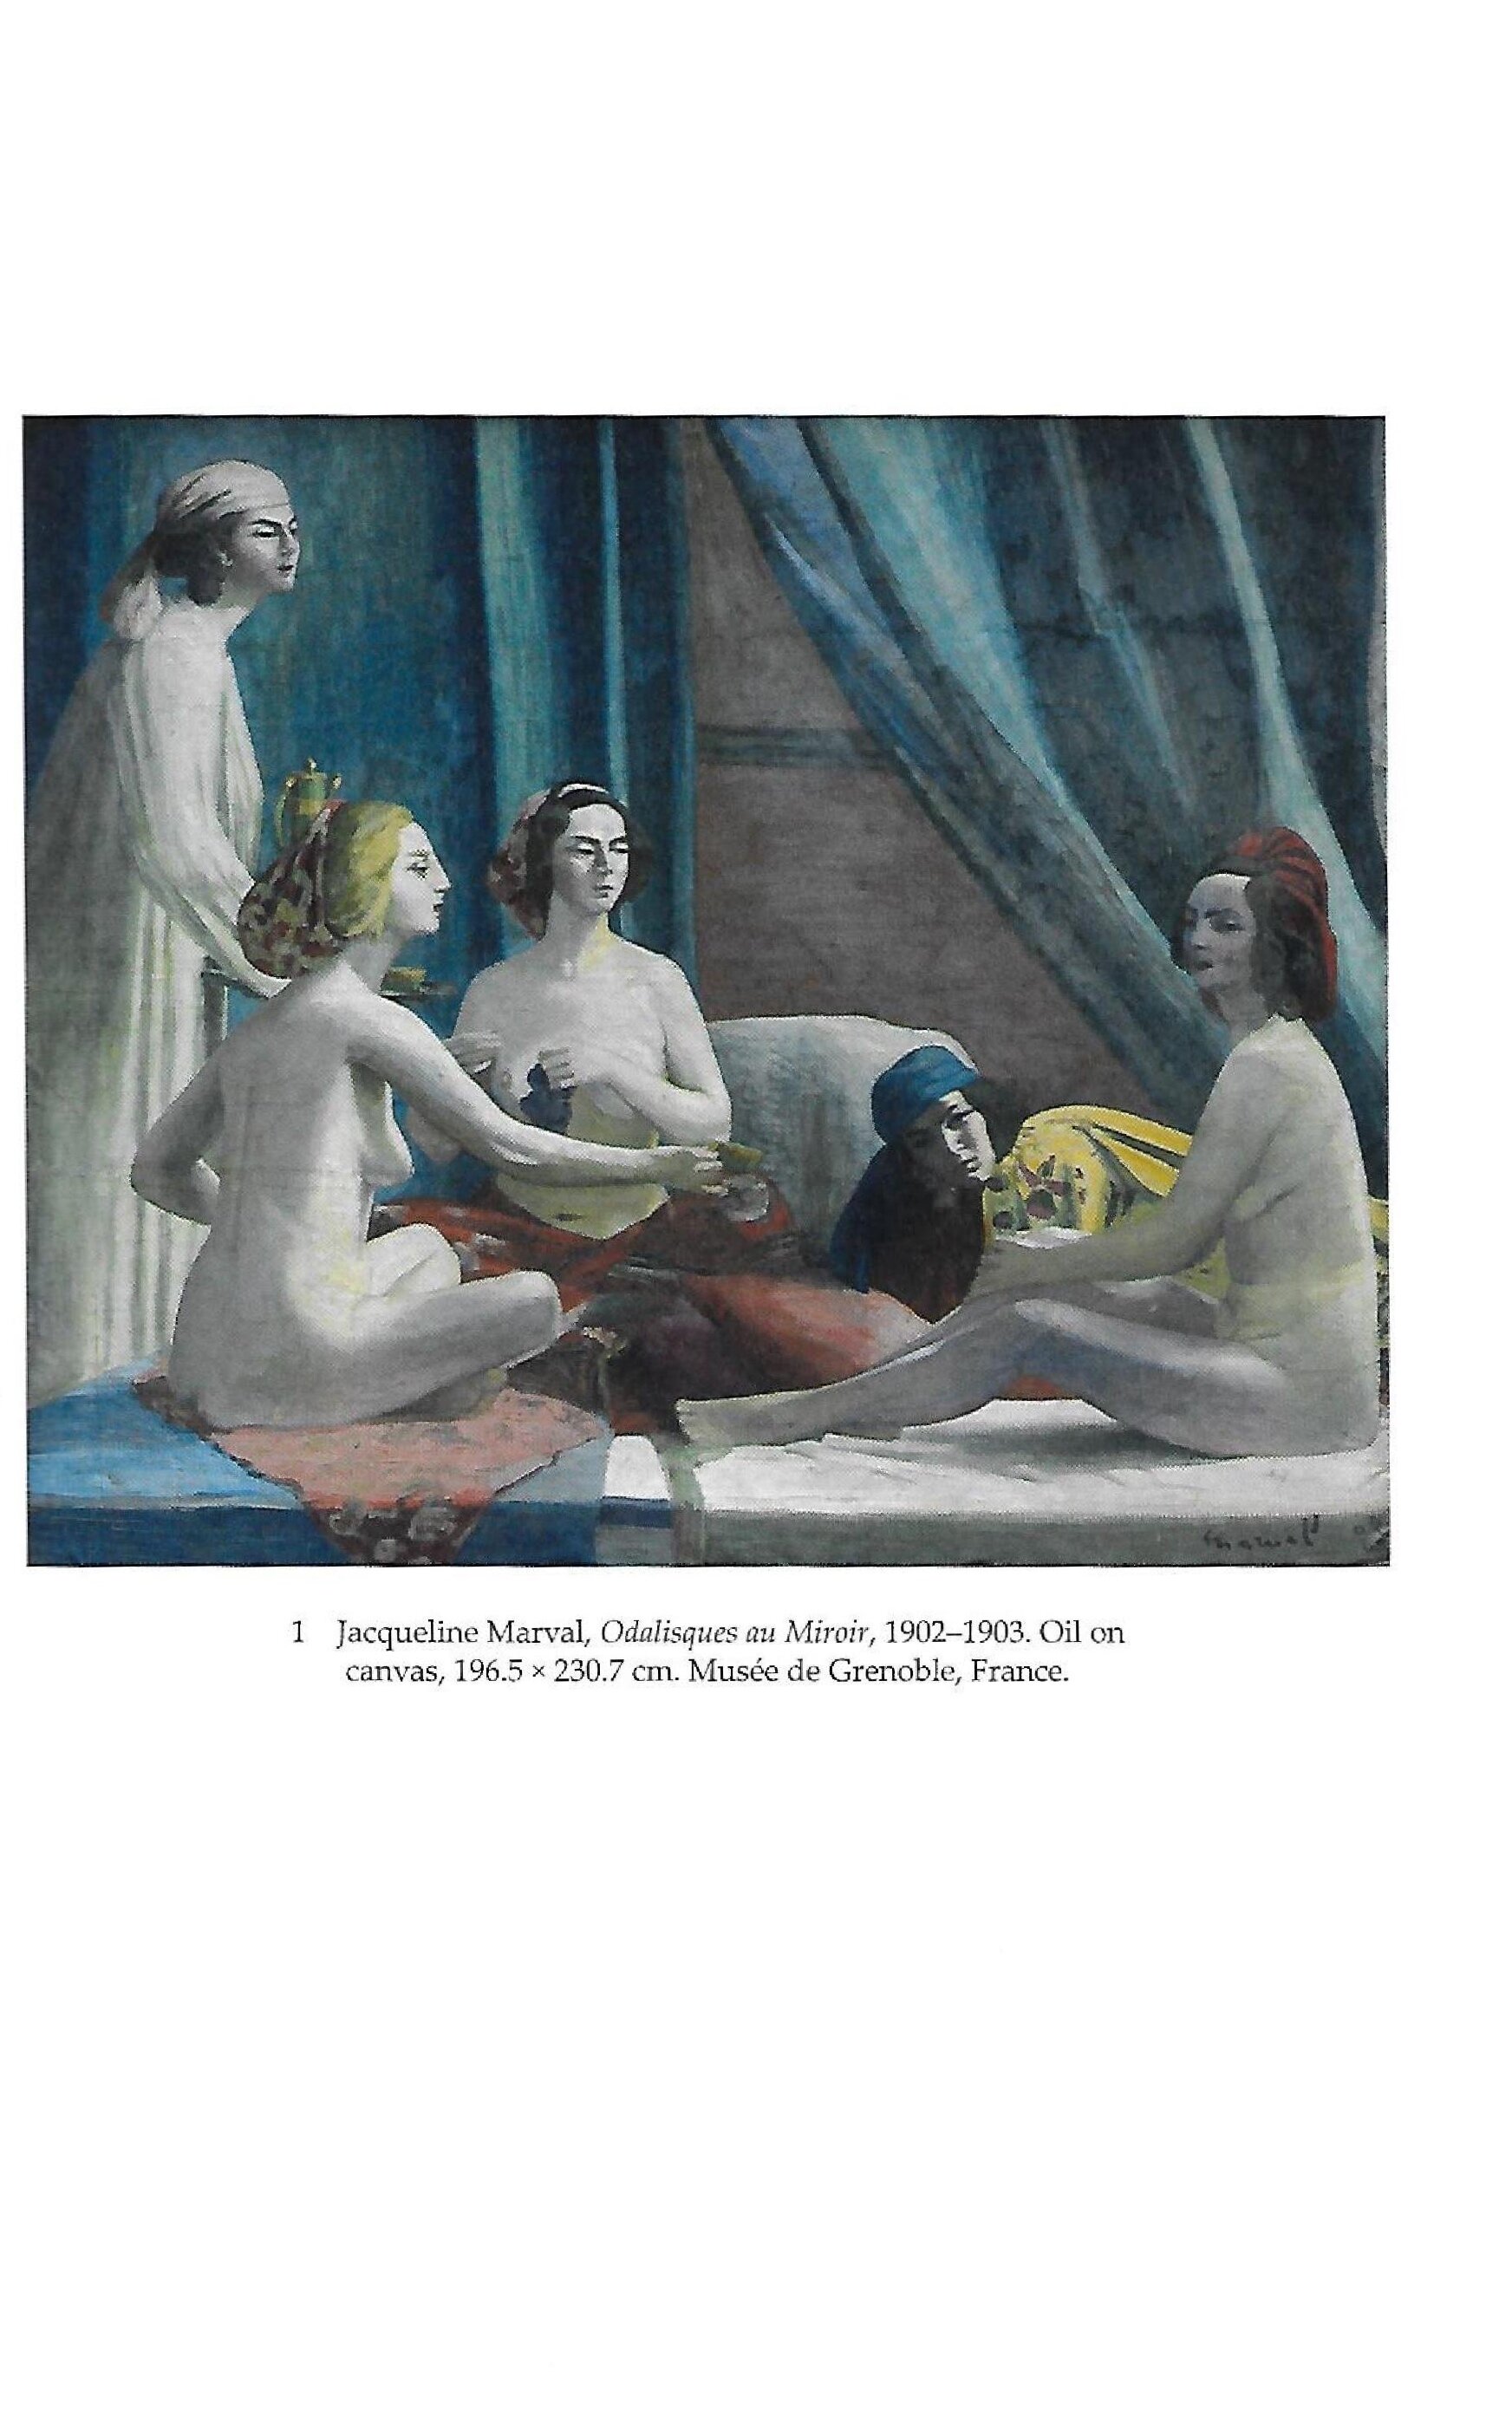 Women Artists in the Interwar France, Framing Femininities, Paula J. Birnbaum, 2011 (Copy)